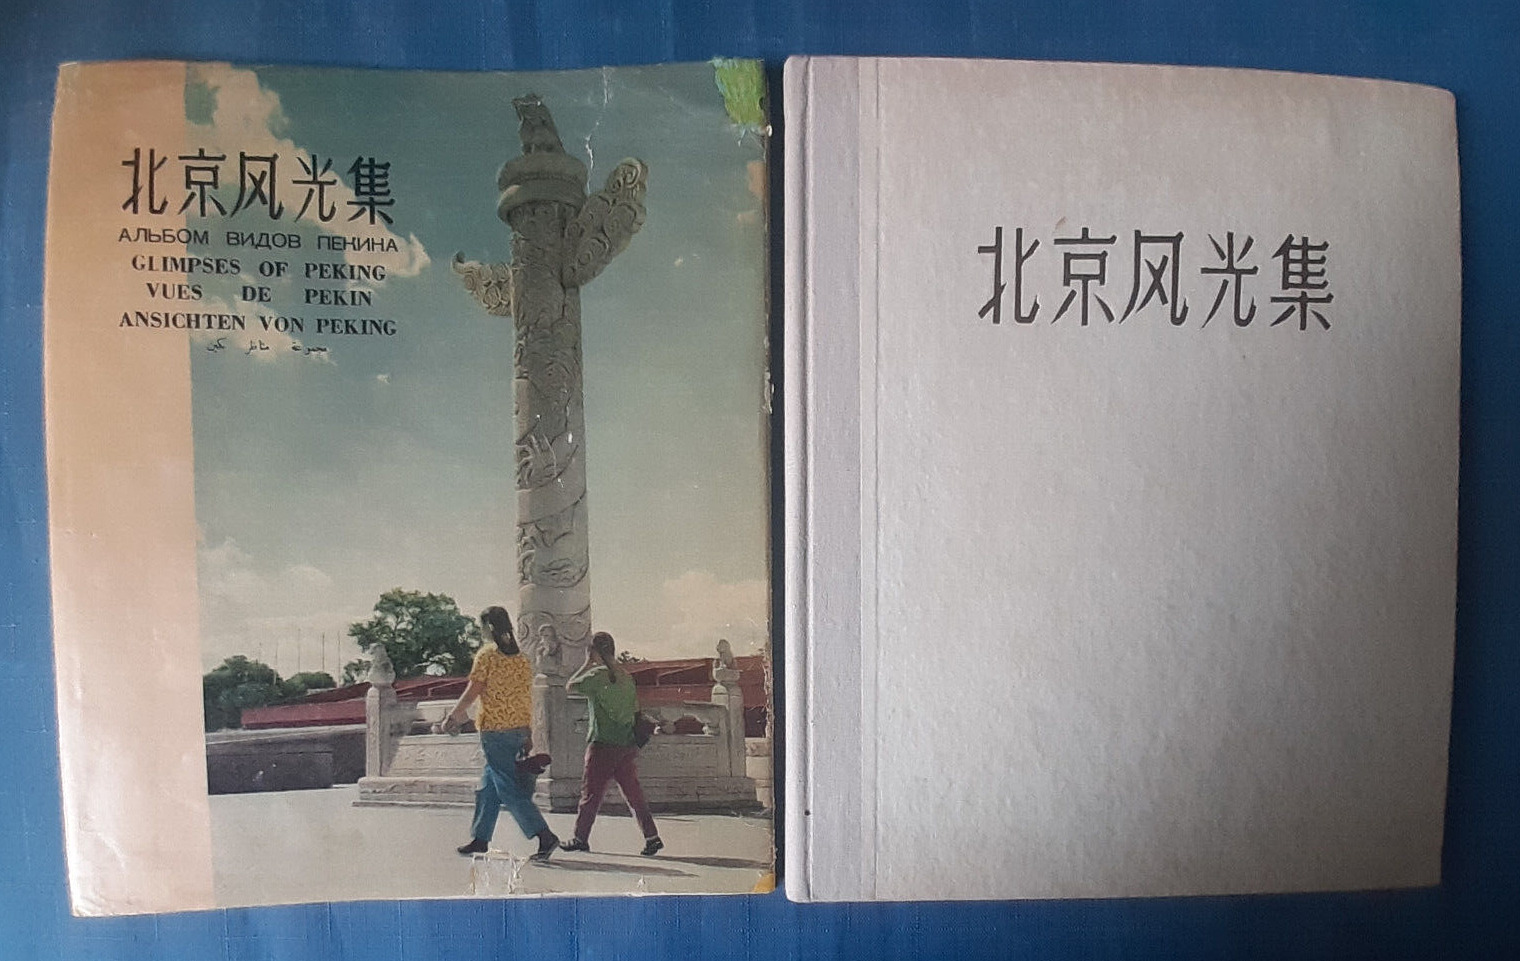 1957 Views of Beijing China Great Wall Photo album rare Russian Chinese book